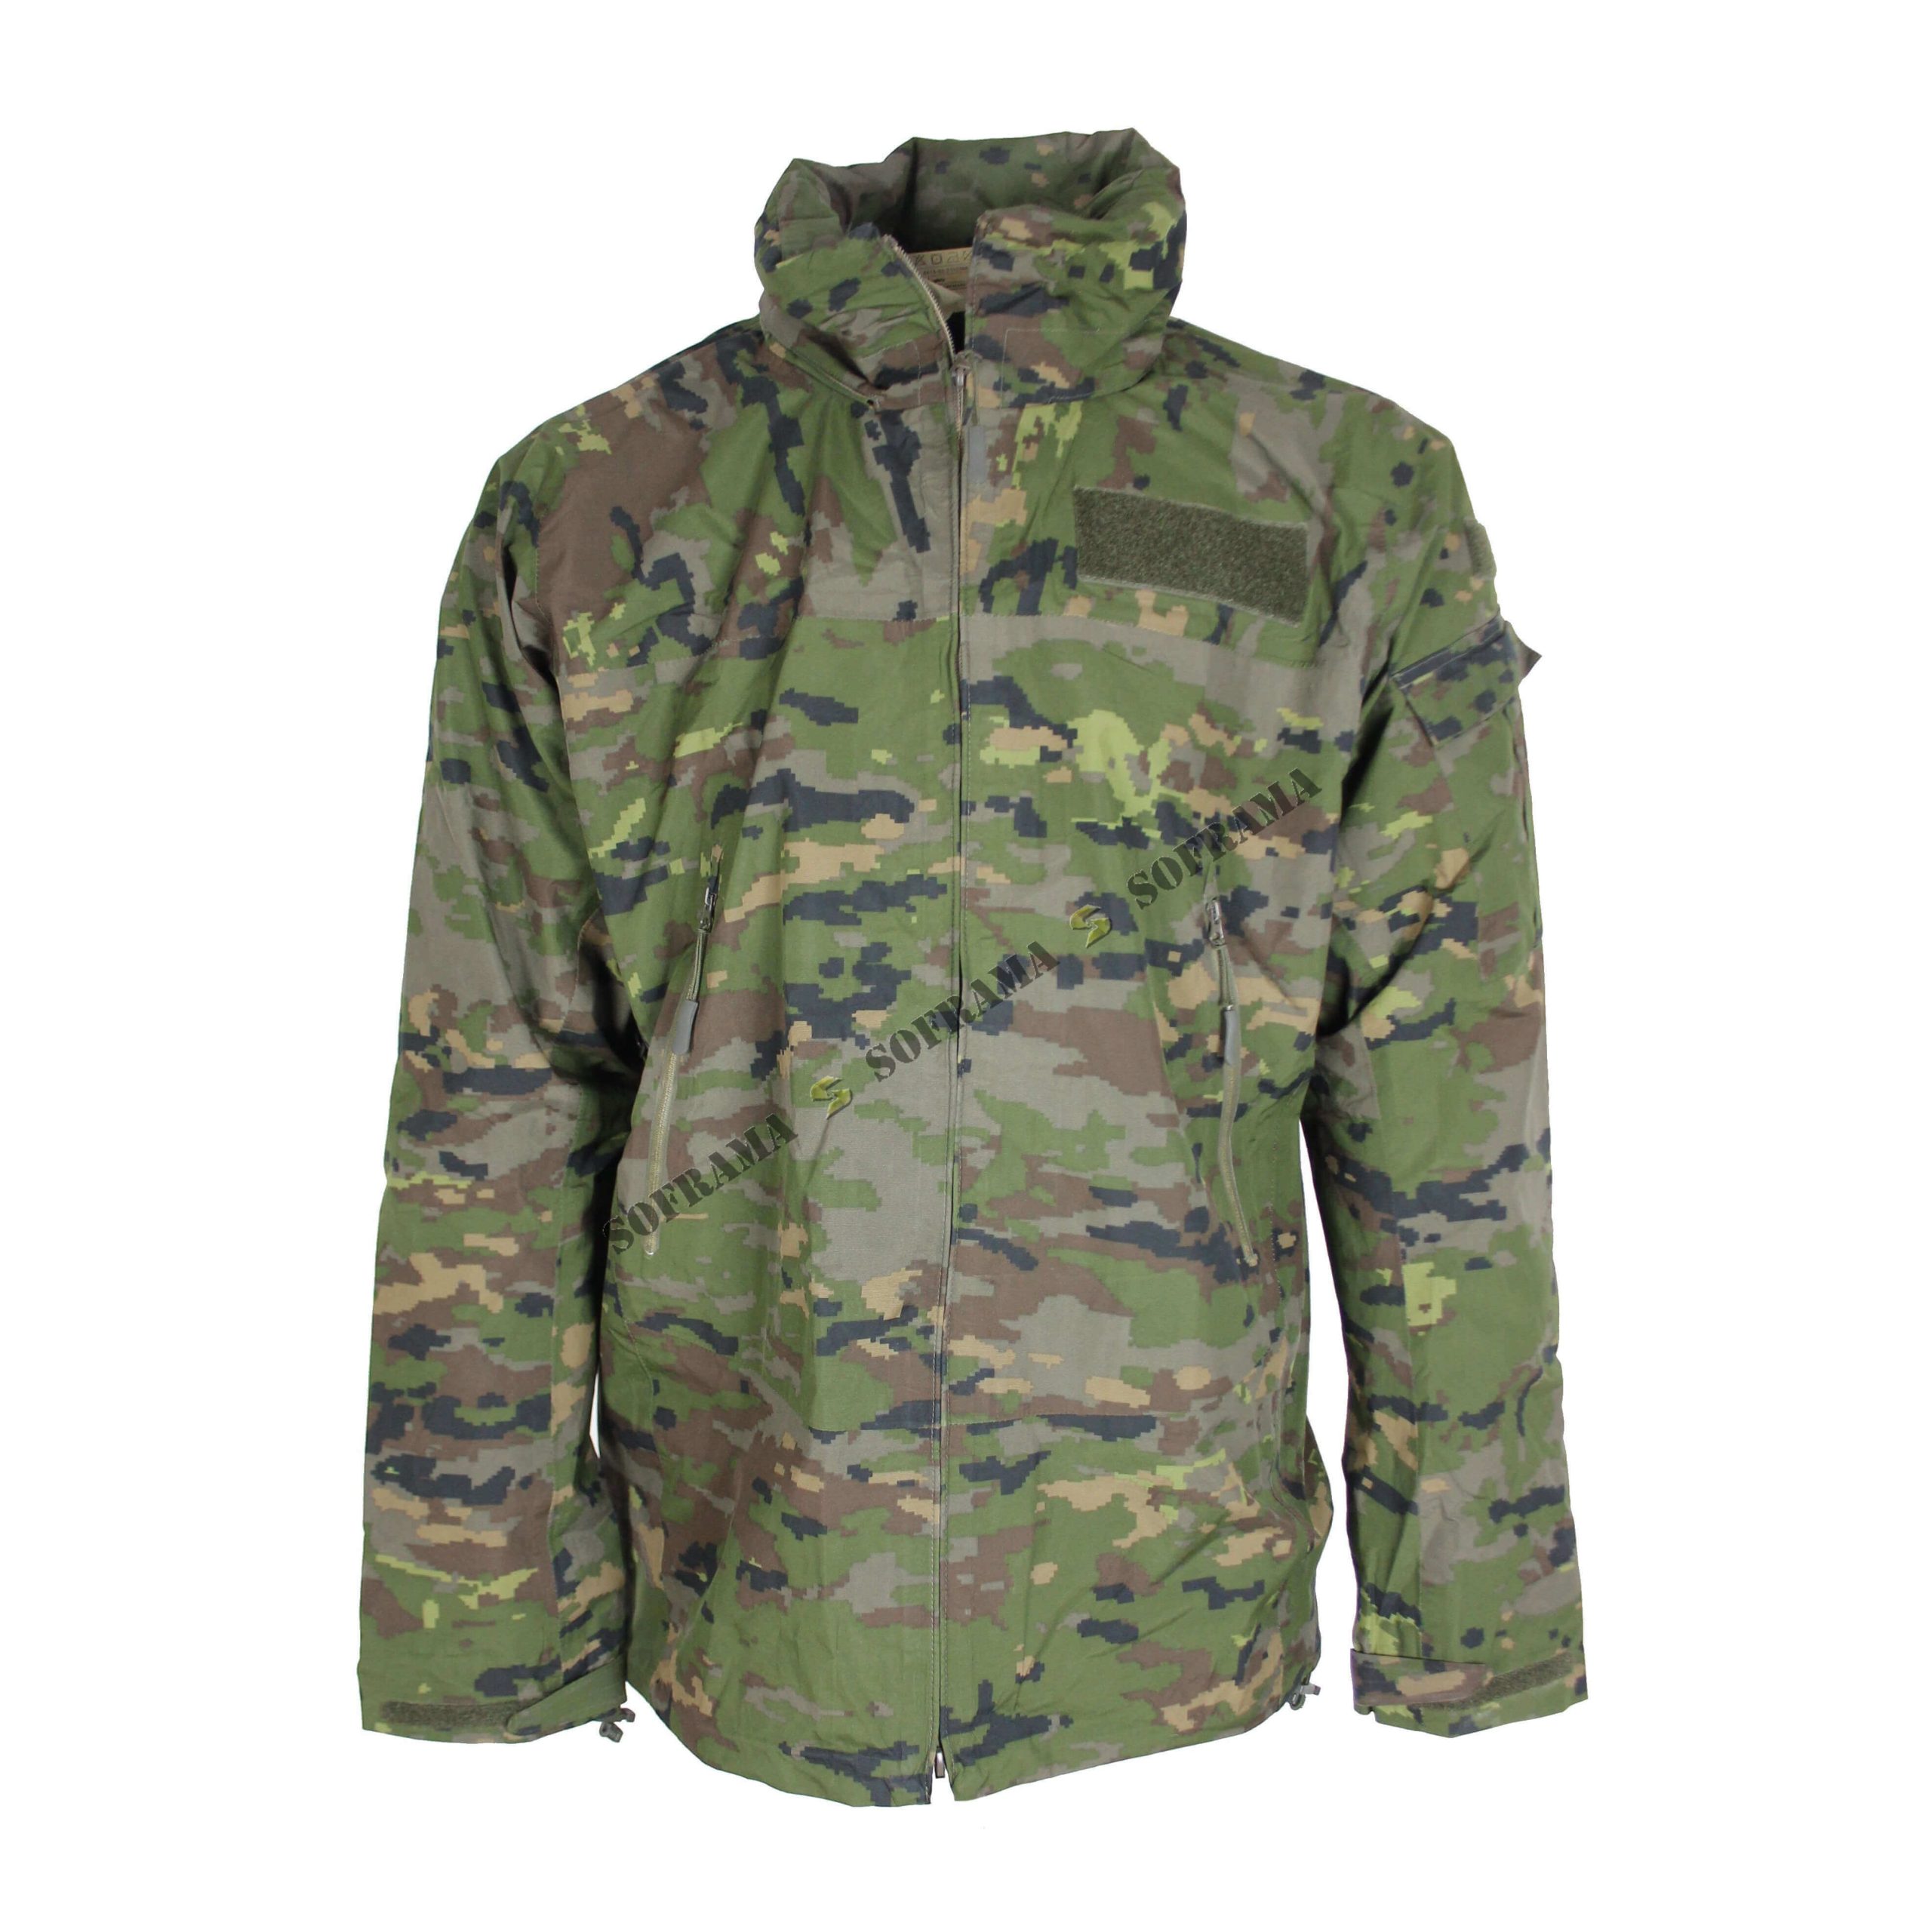 Spanish Desert Military Army style Acu Camouflage Uniform Training Uniform - Us Army Style Dress Uniform price